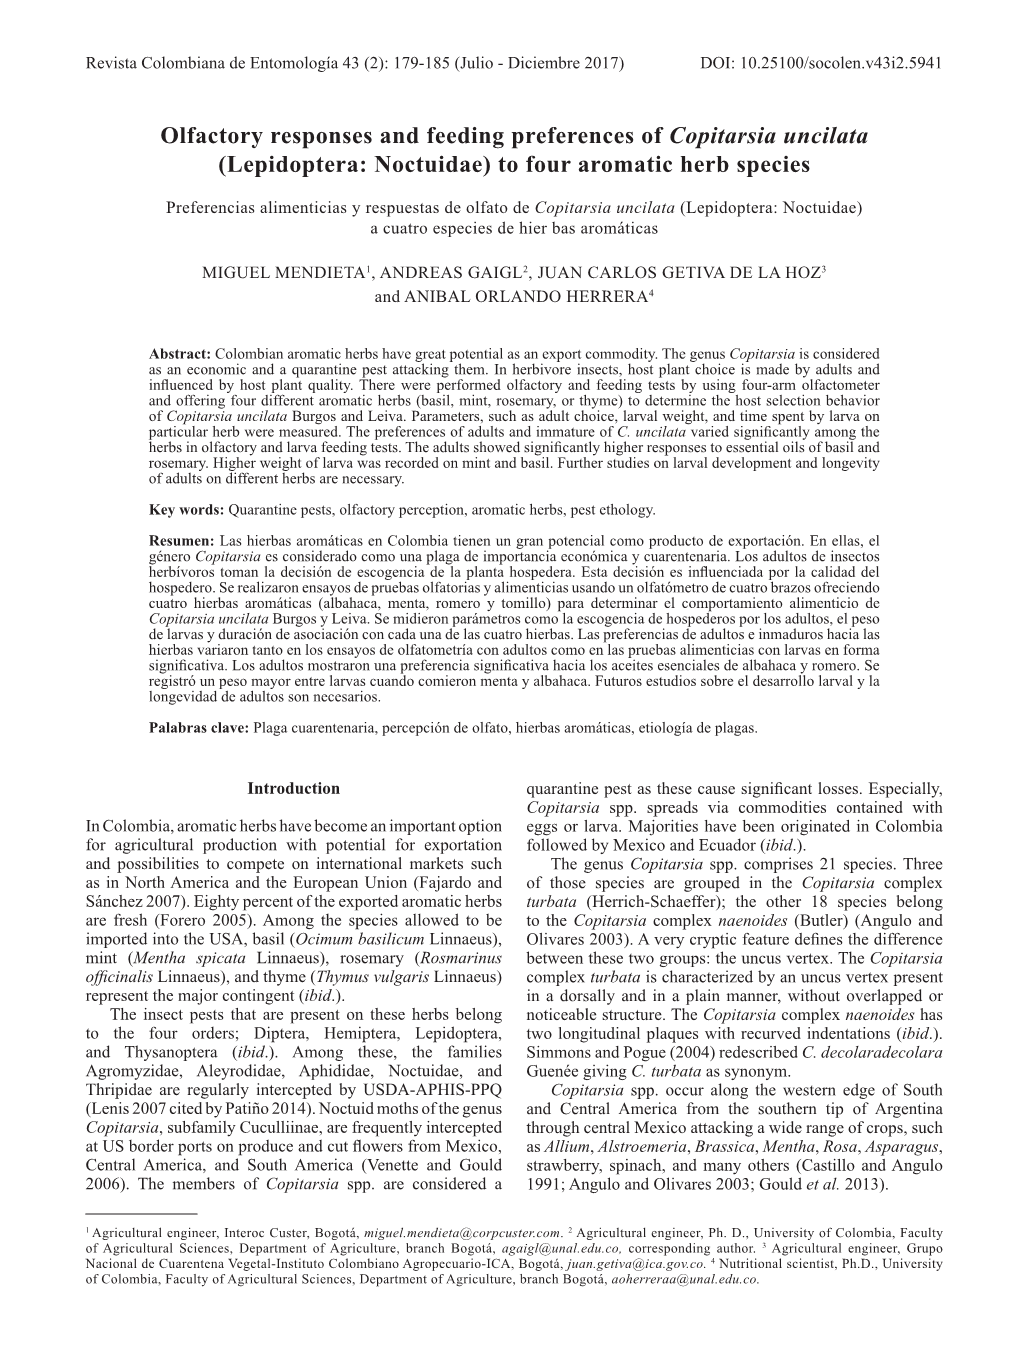 Olfactory Responses and Feeding Preferences of Copitarsia Uncilata (Lepidoptera: Noctuidae) to Four Aromatic Herb Species